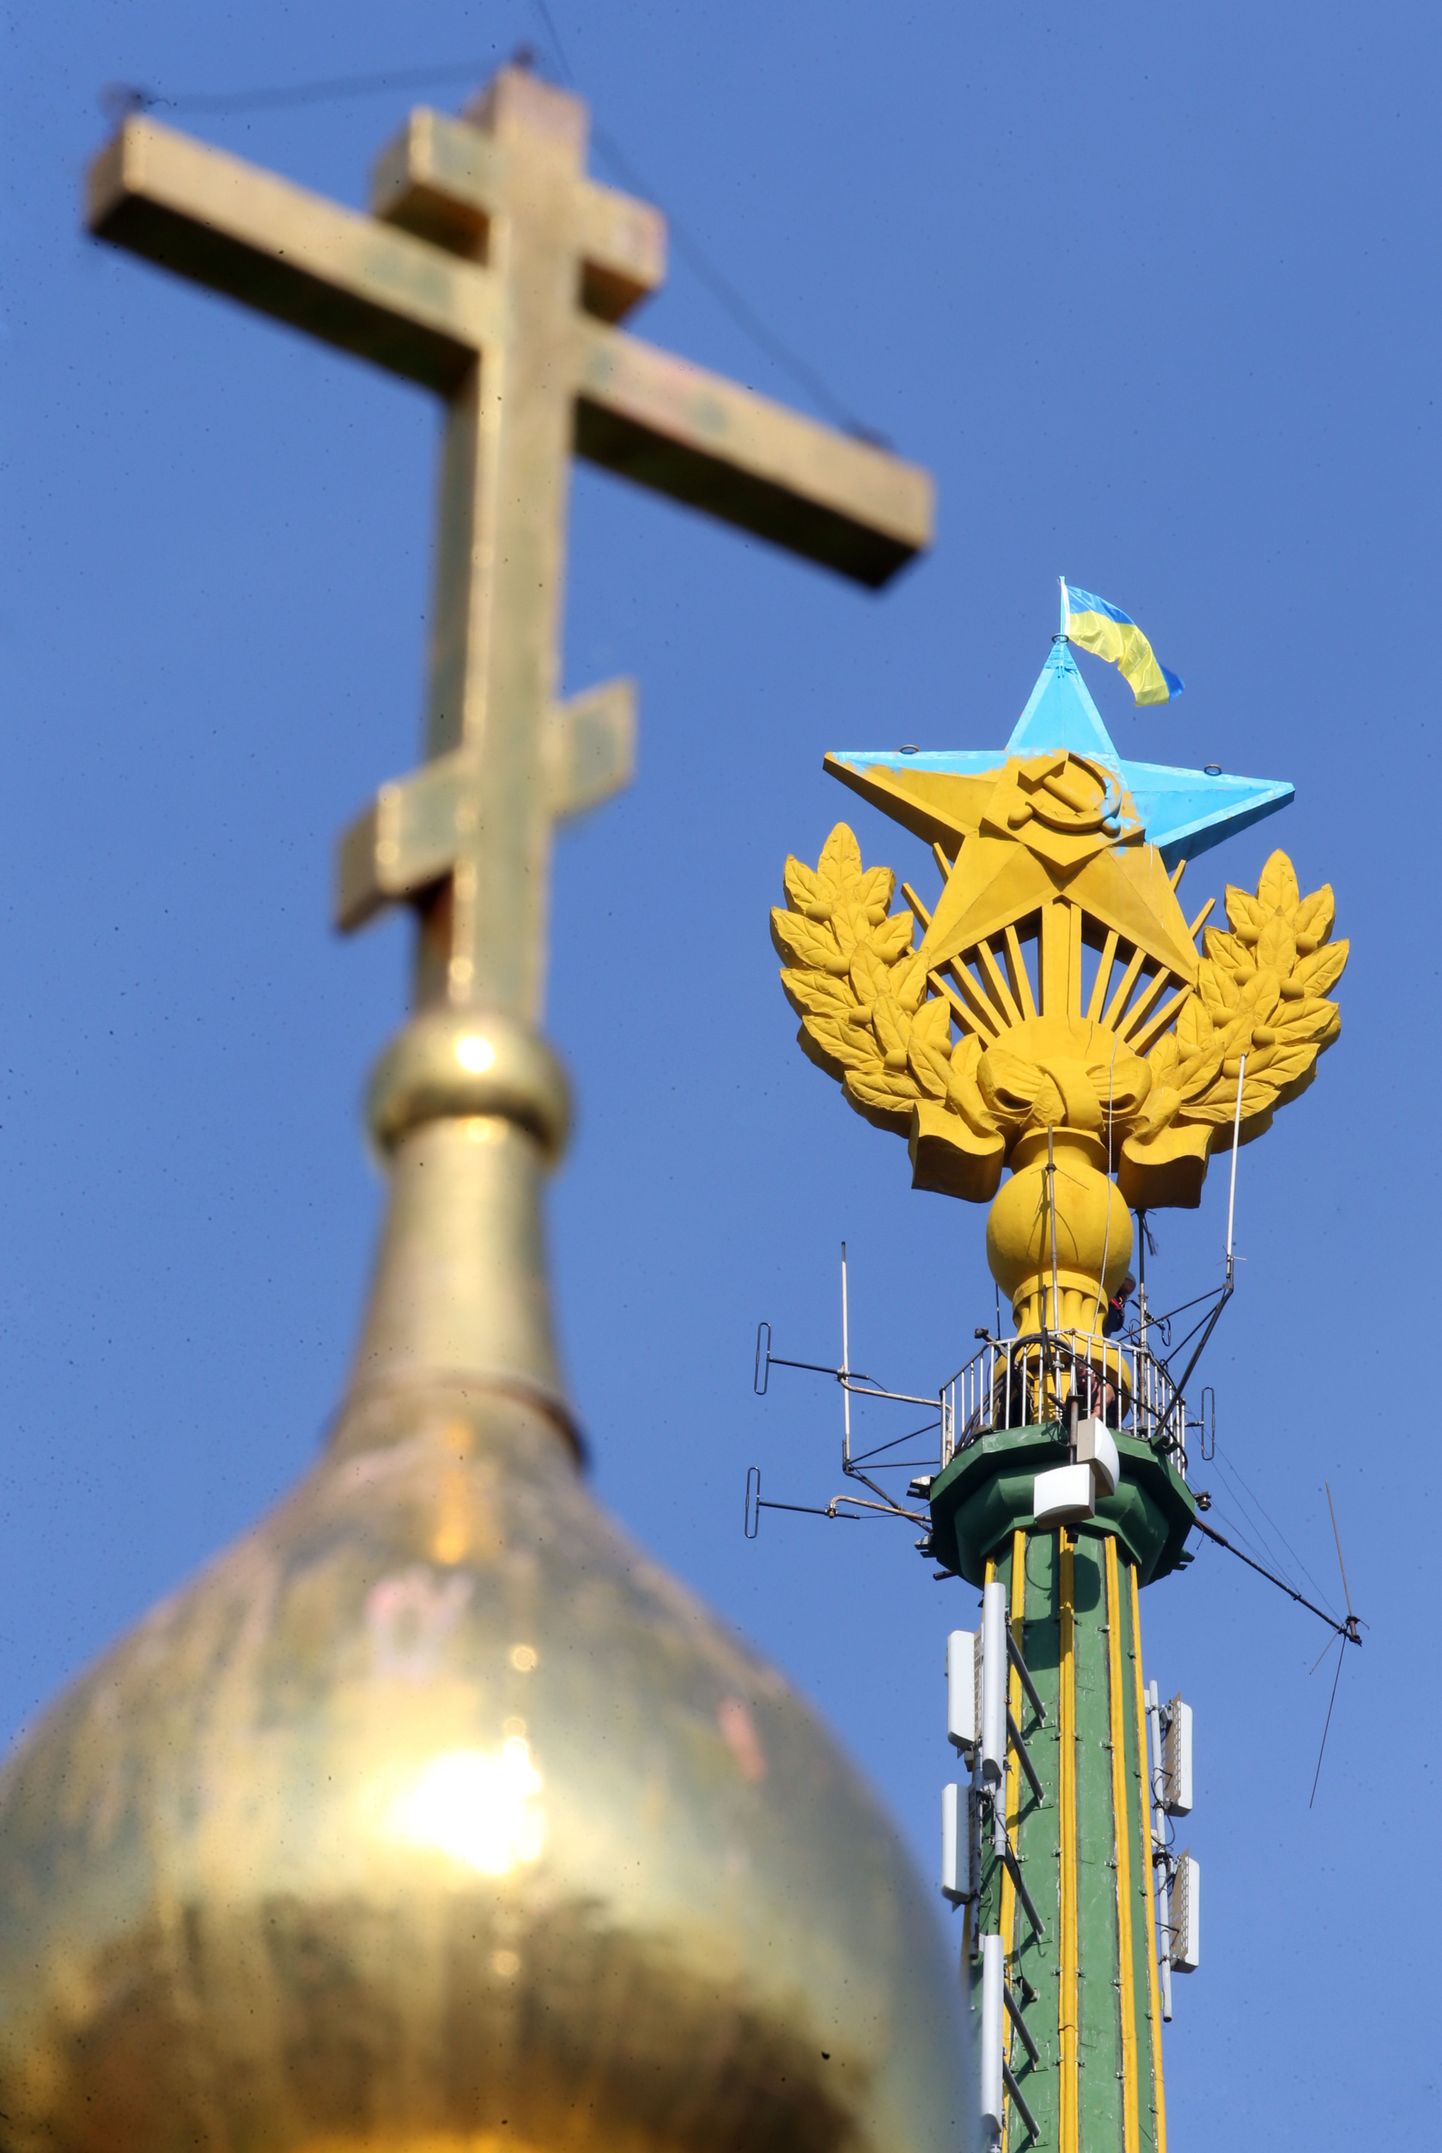 Ukraina rahvusvärvid Moskva taeva all.